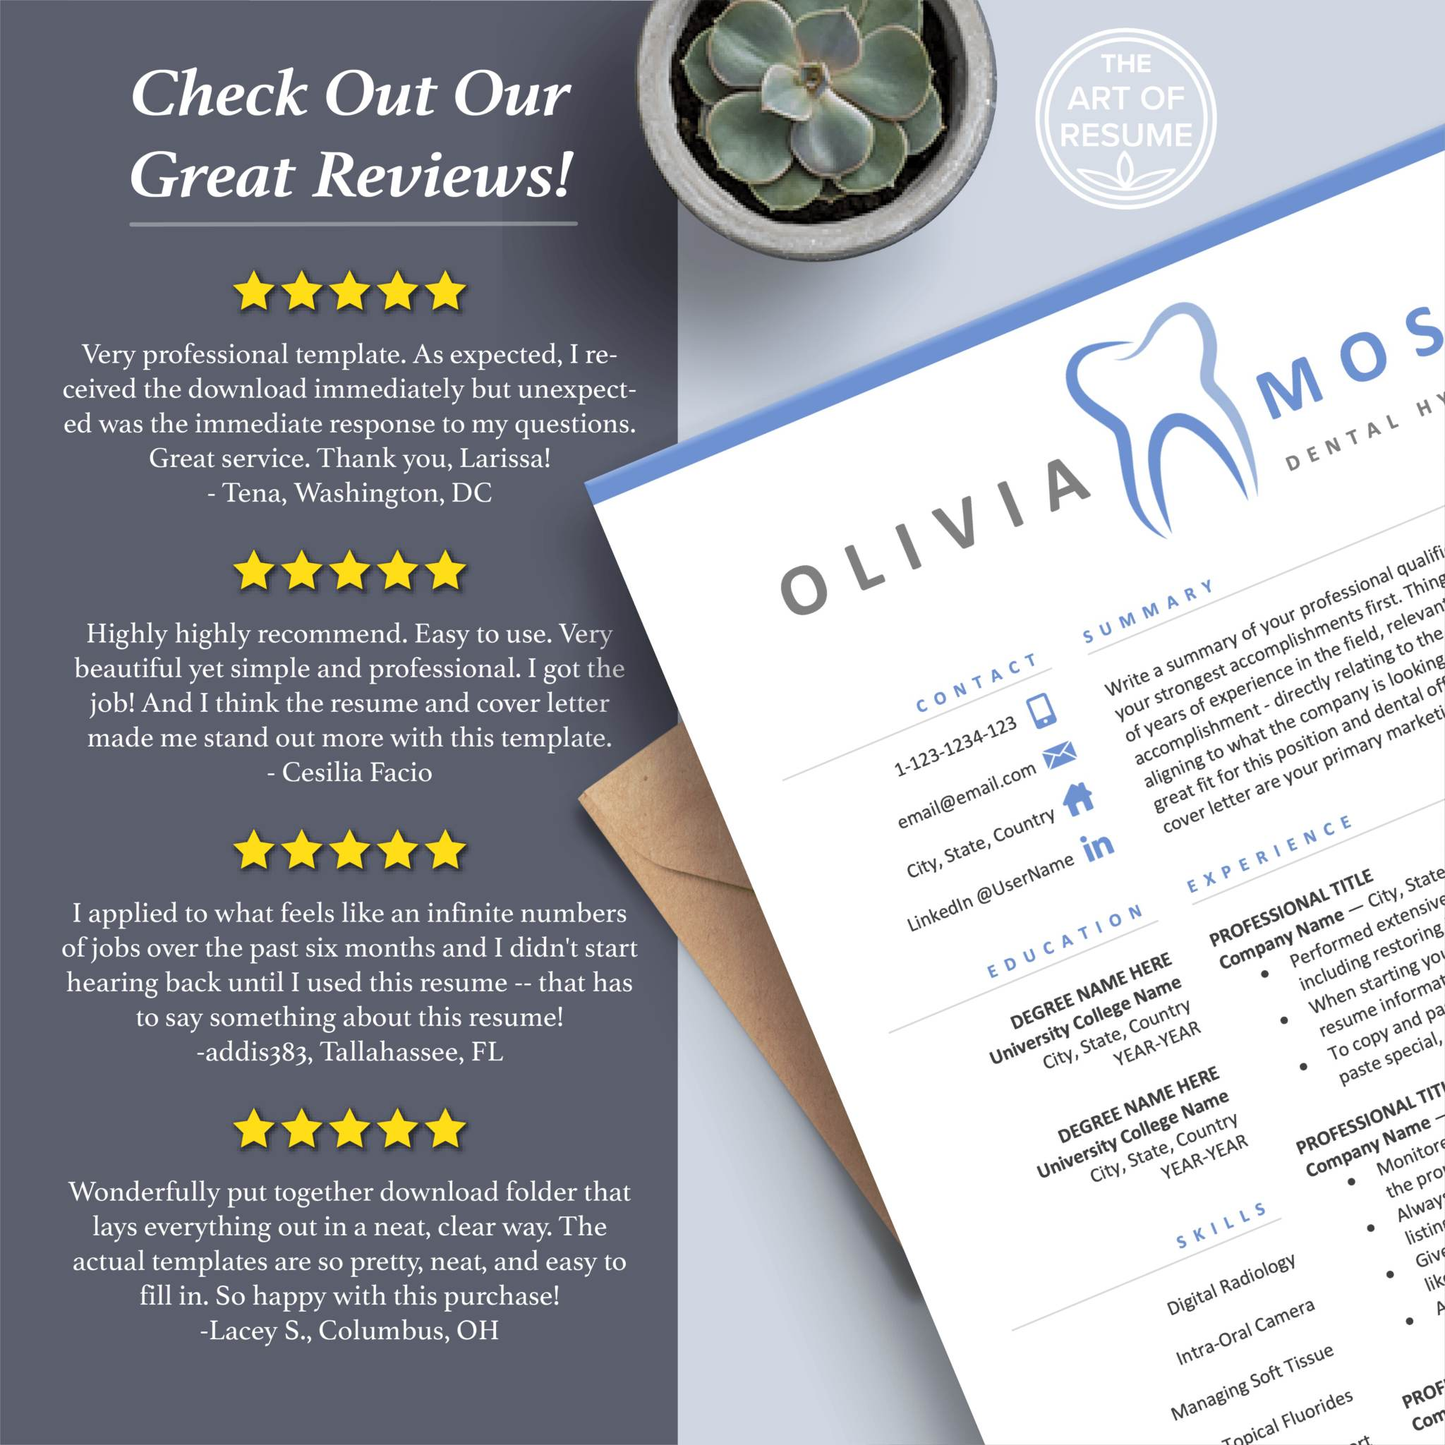 The Art of Resume Templates | Dentist, Hygienist, Dental Student, Assistant Resume CV Templates Online 5-Star Reviews